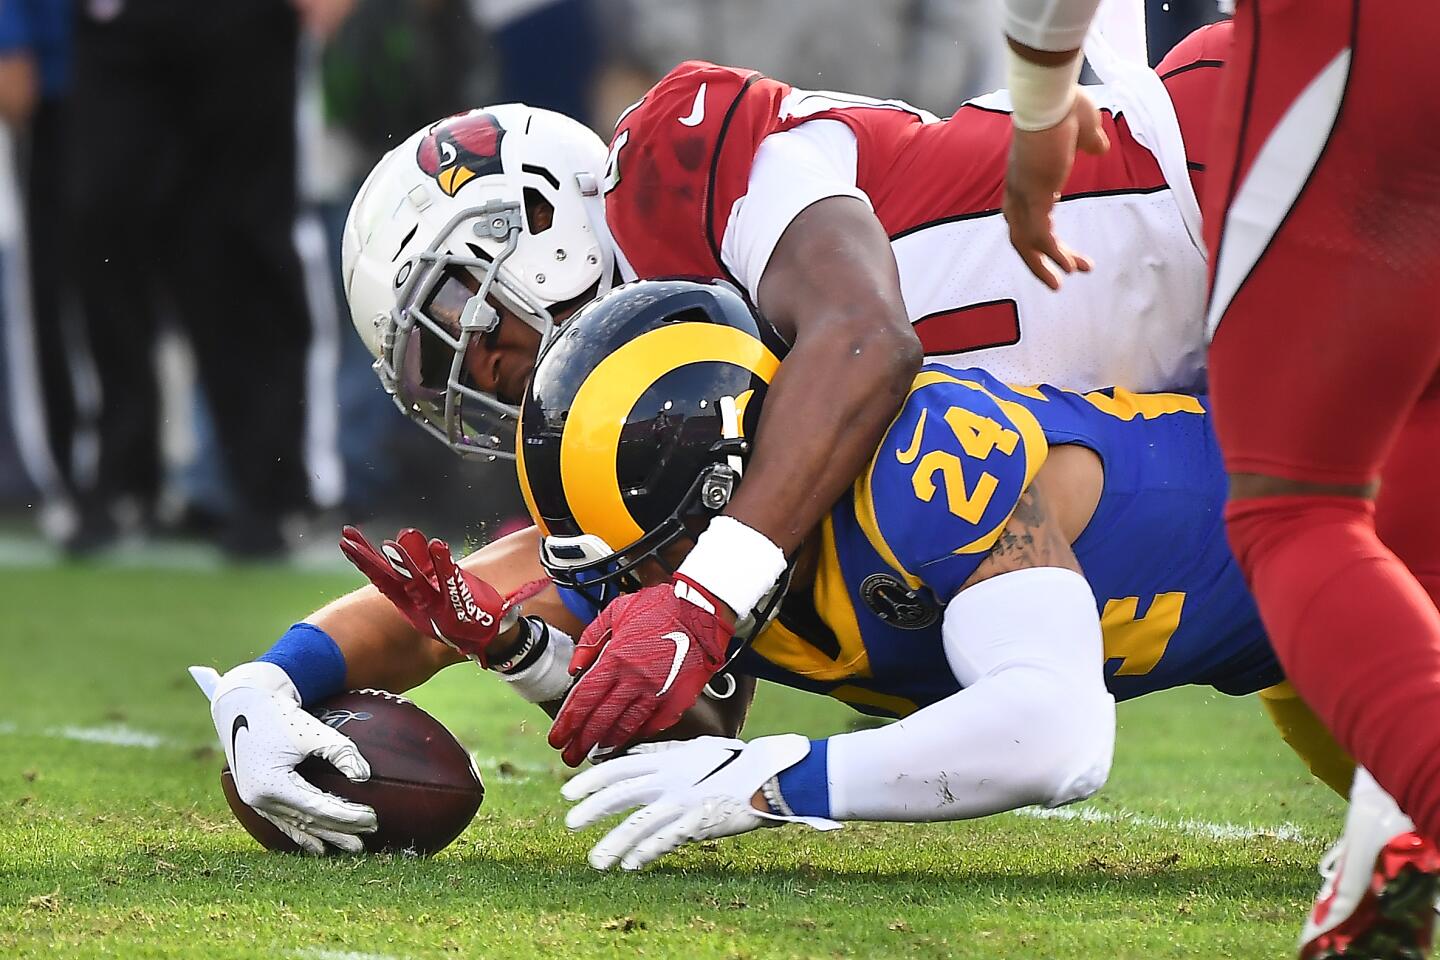 Rams safety Taylor Rapp recovers a fumble by Arizona Cardinals running back Kenyan Drake during the second quarter.